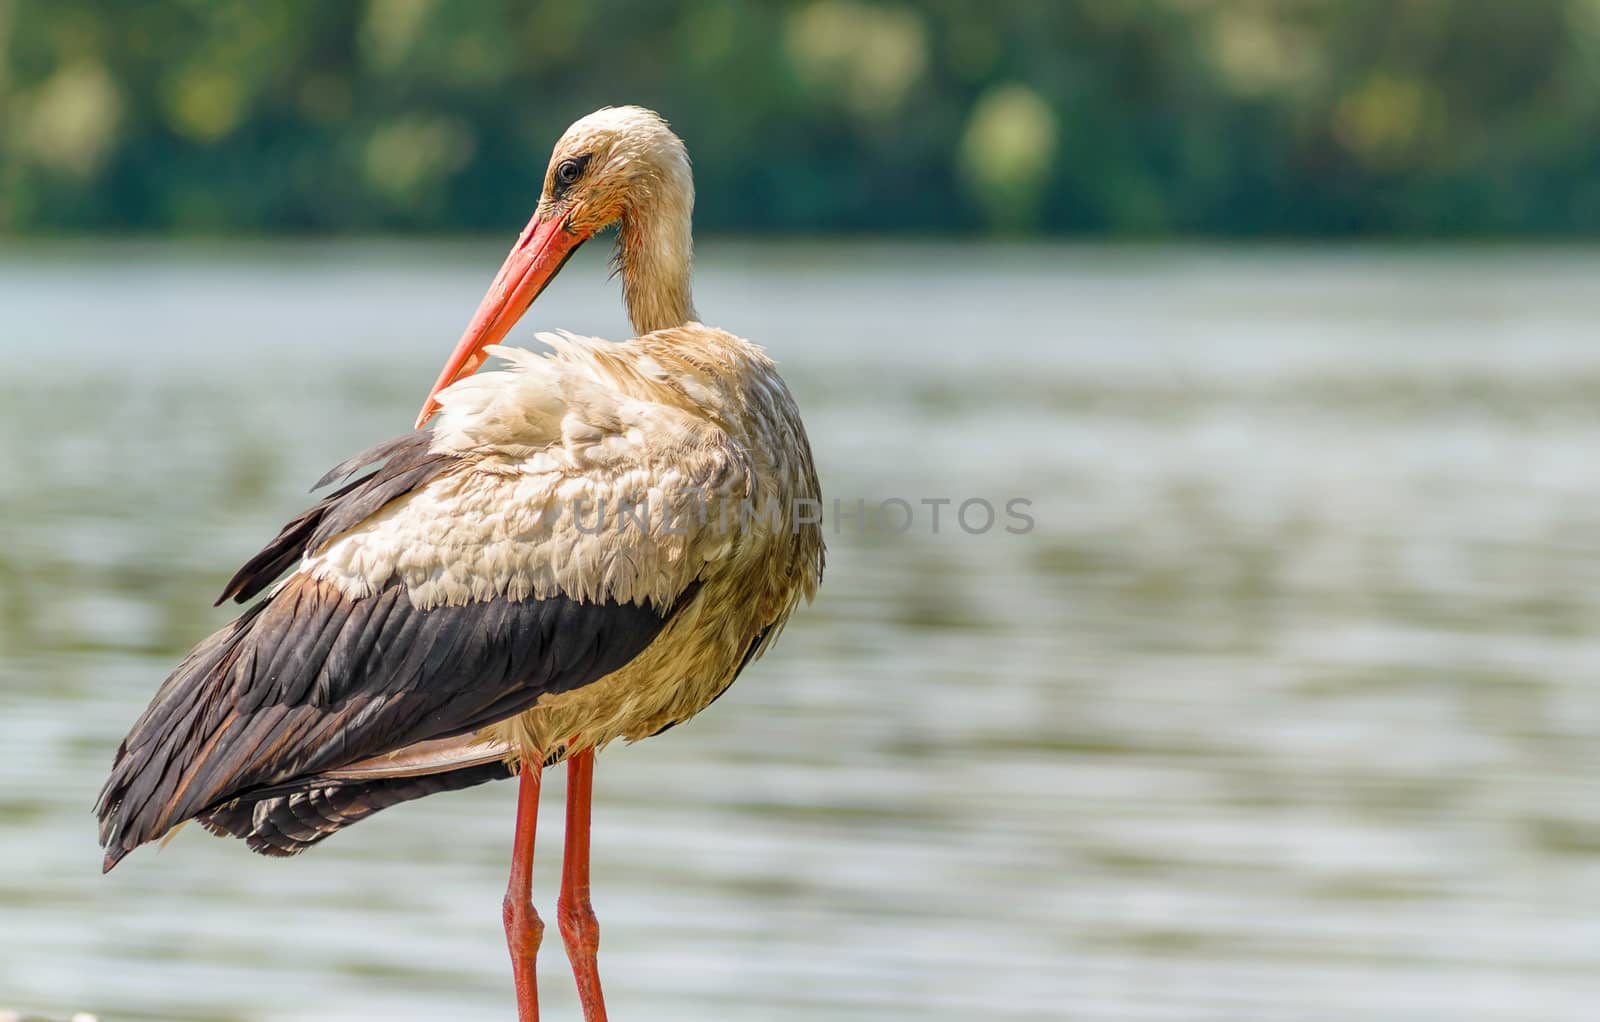 Stork Near the River by MaxalTamor